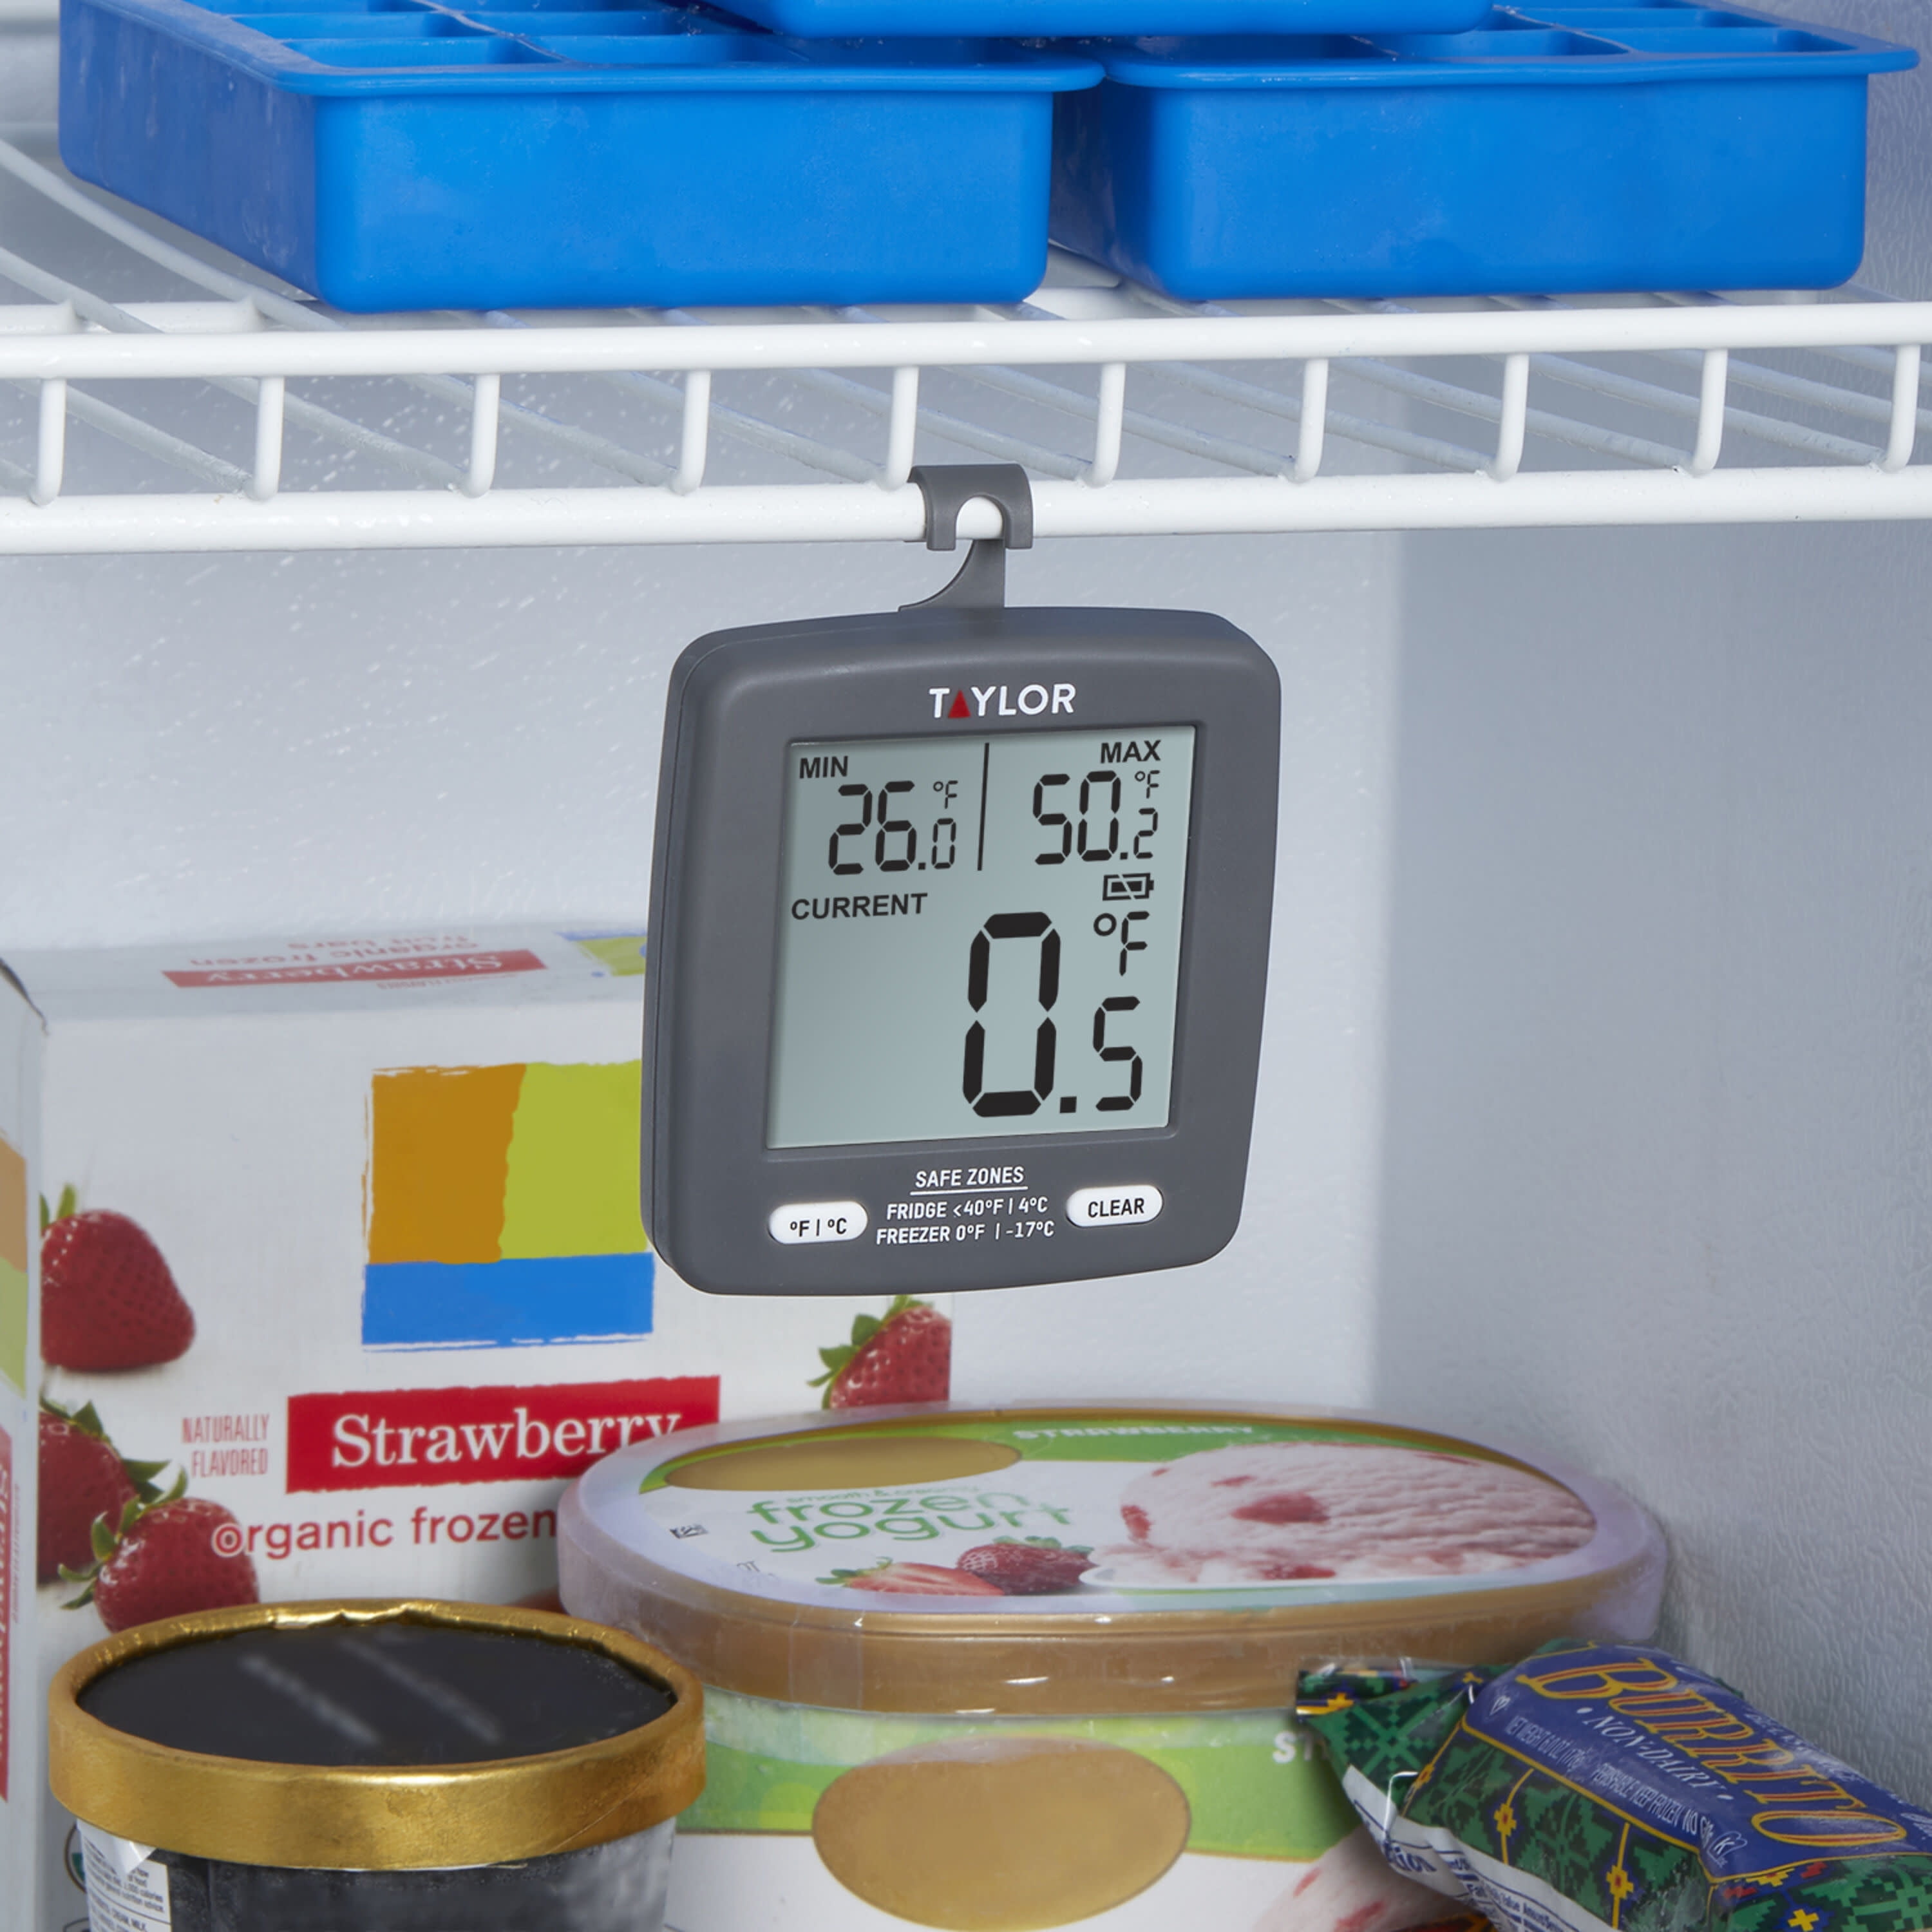 Taylor 3507FS Hanging 2-1/2 Refrigerator/Freezer Thermometer